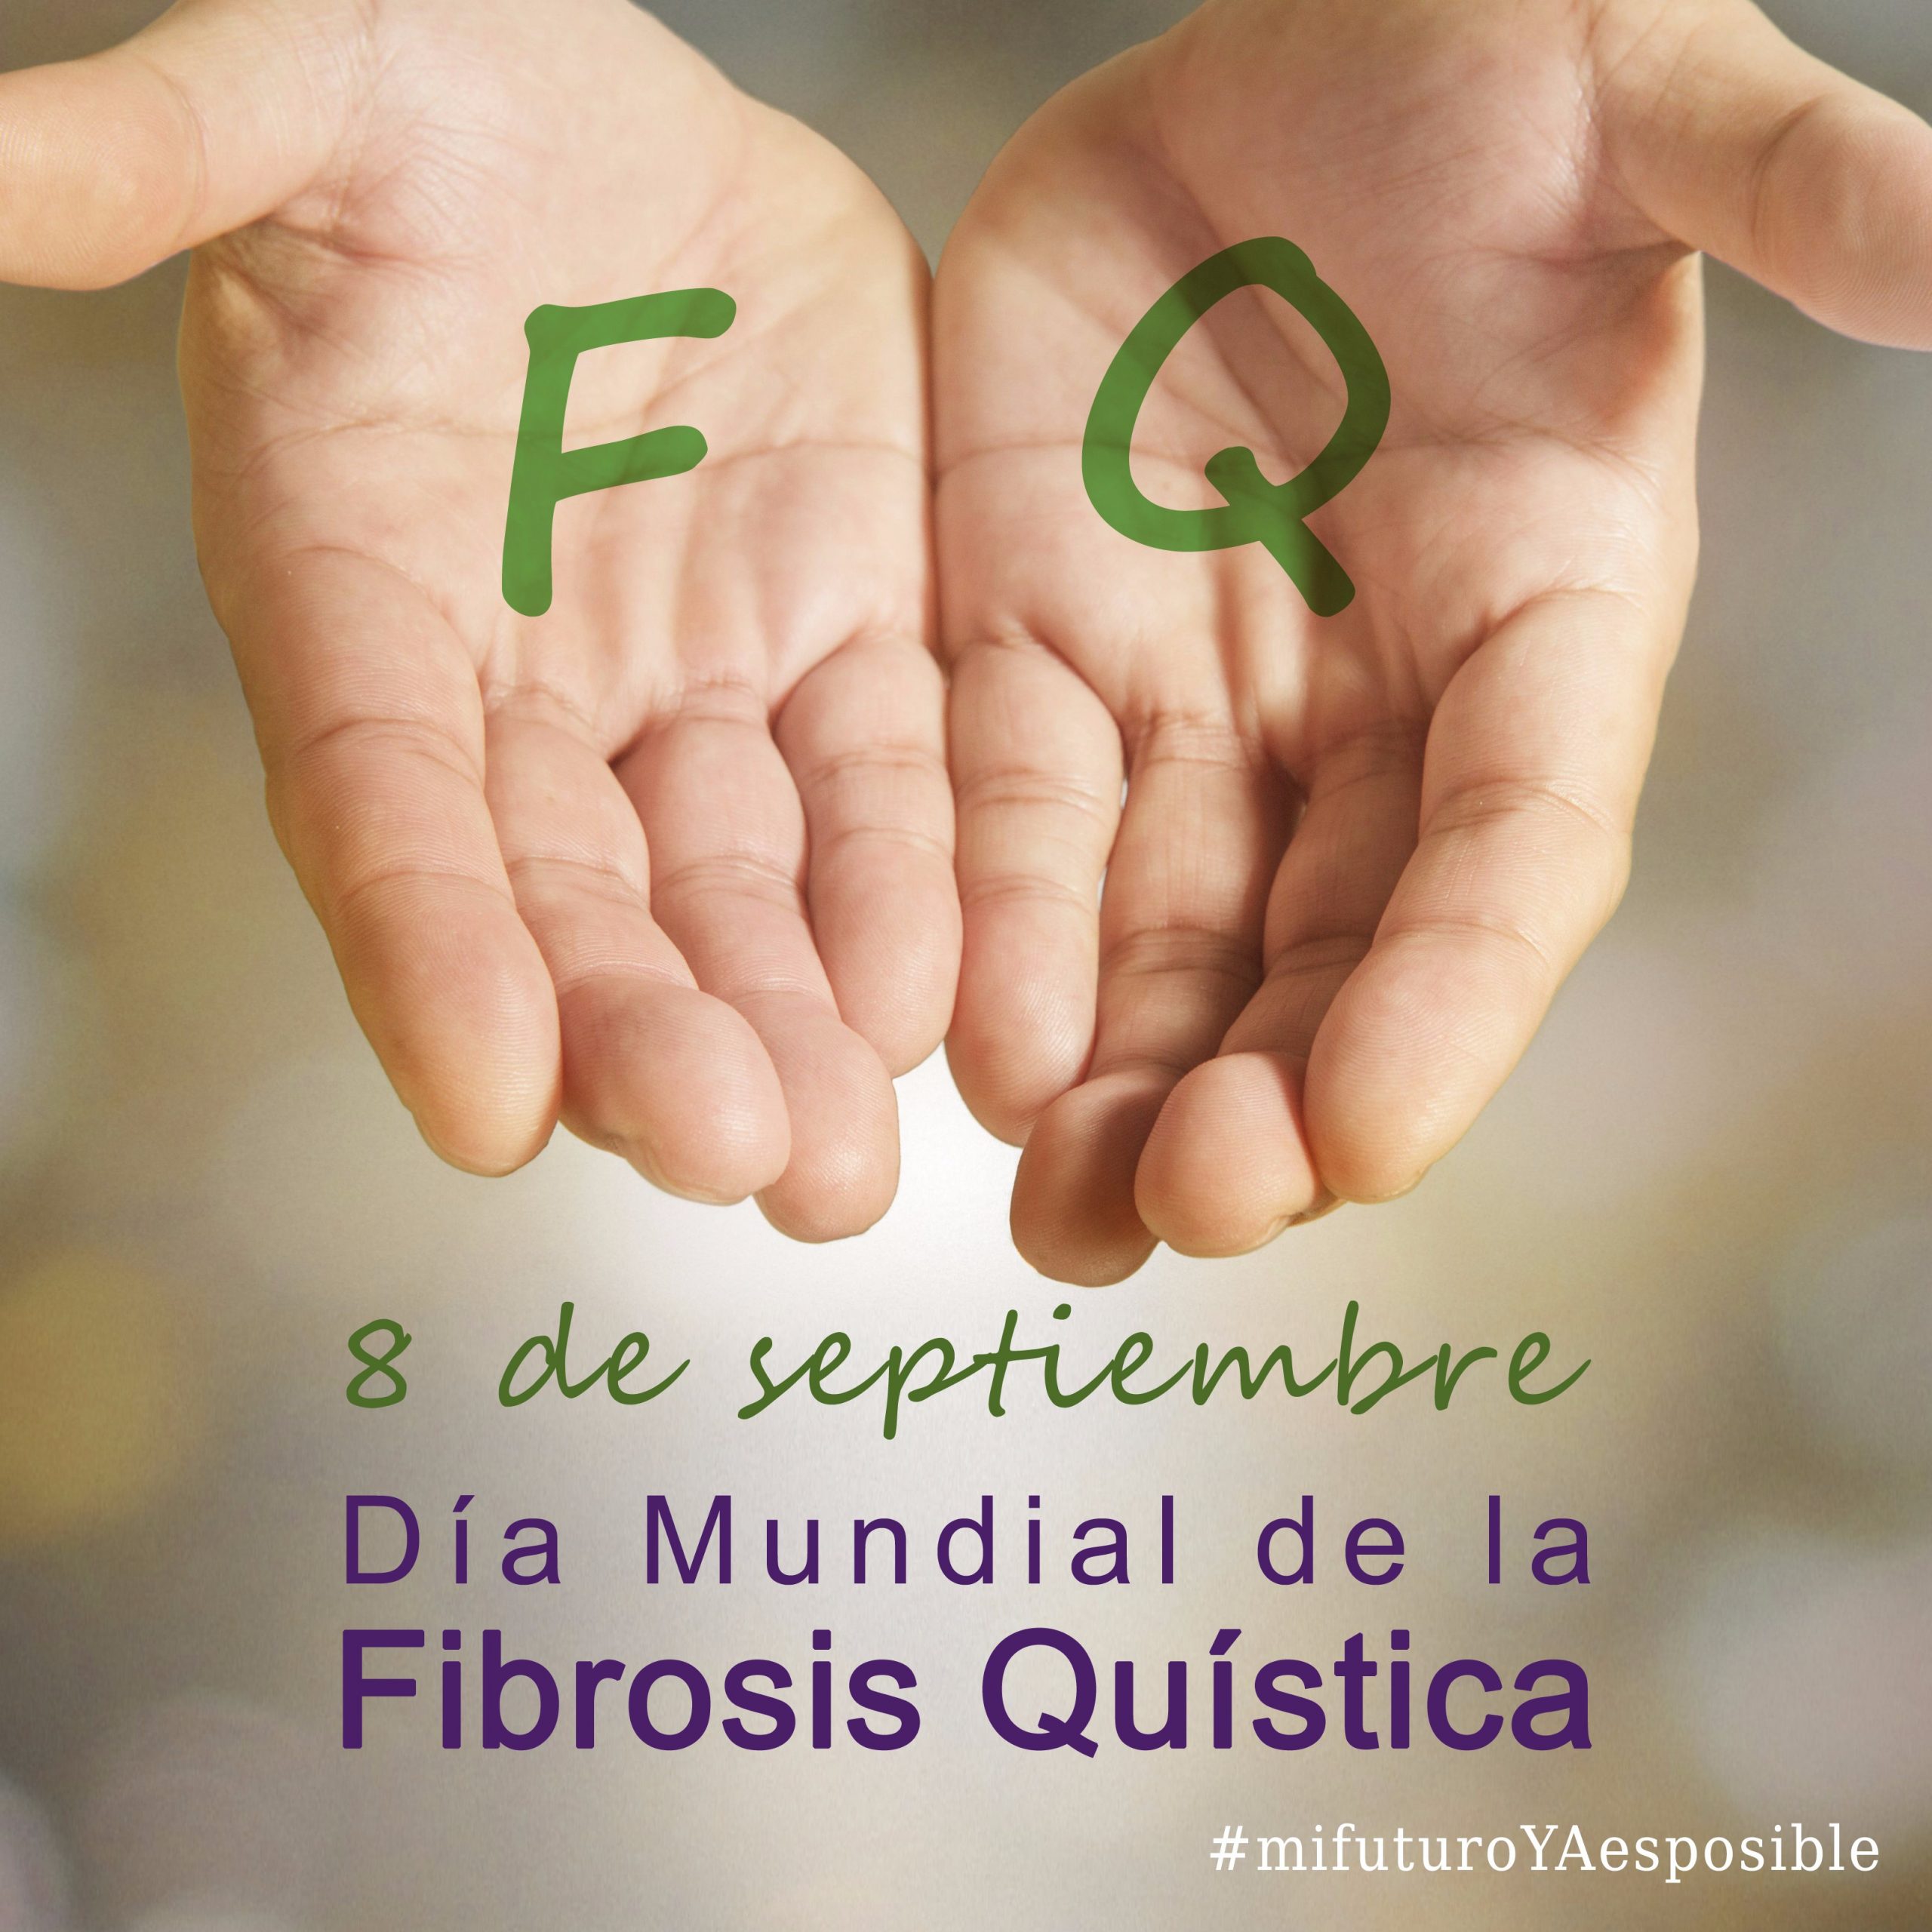 federacion española fibrosis quistica hoy se celebra el dia mundial de la fibrosis quistica scaled